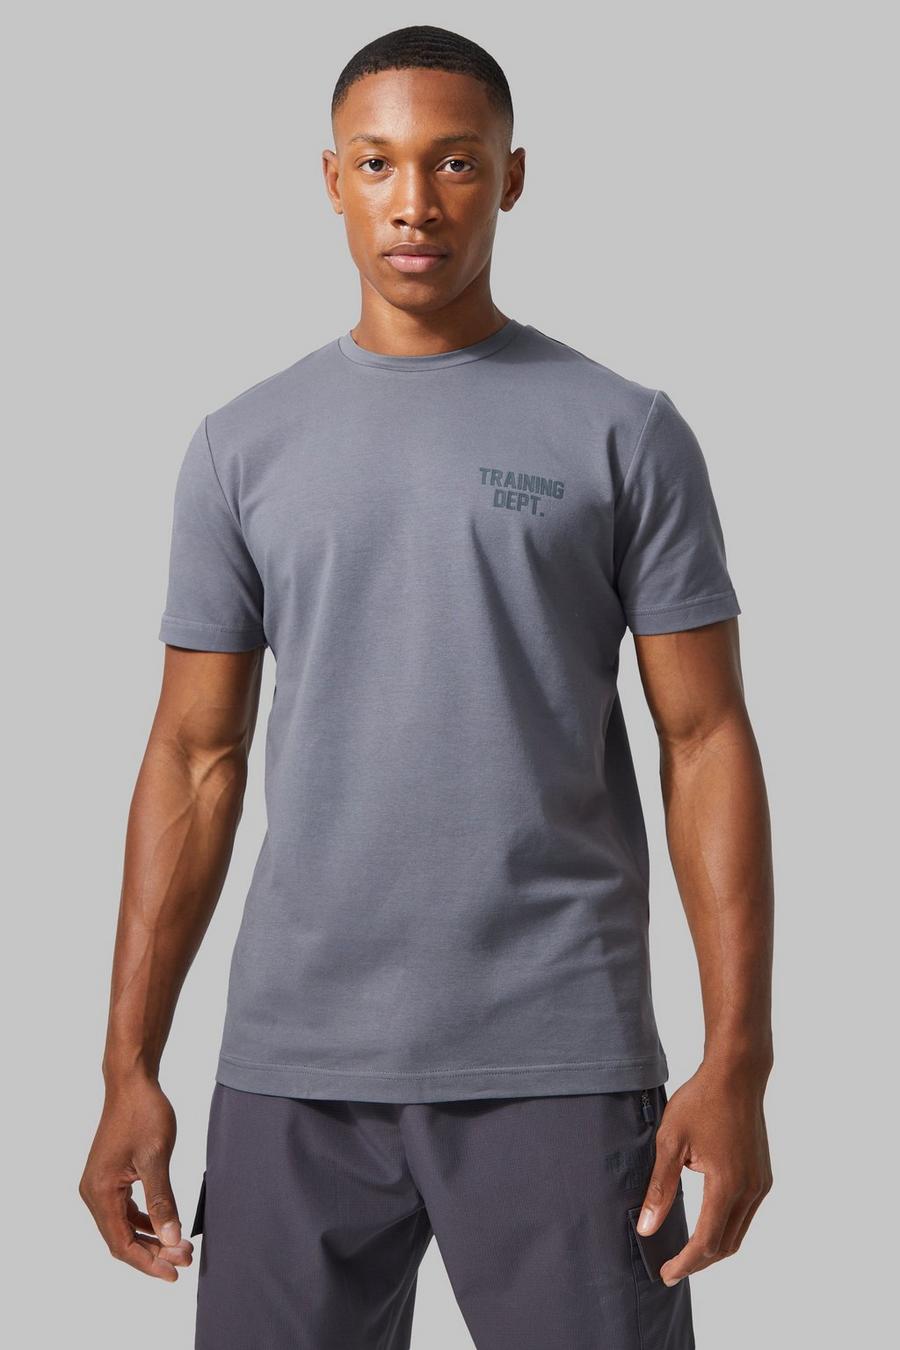 Charcoal Active Training Dept Slim fit t-shirt image number 1